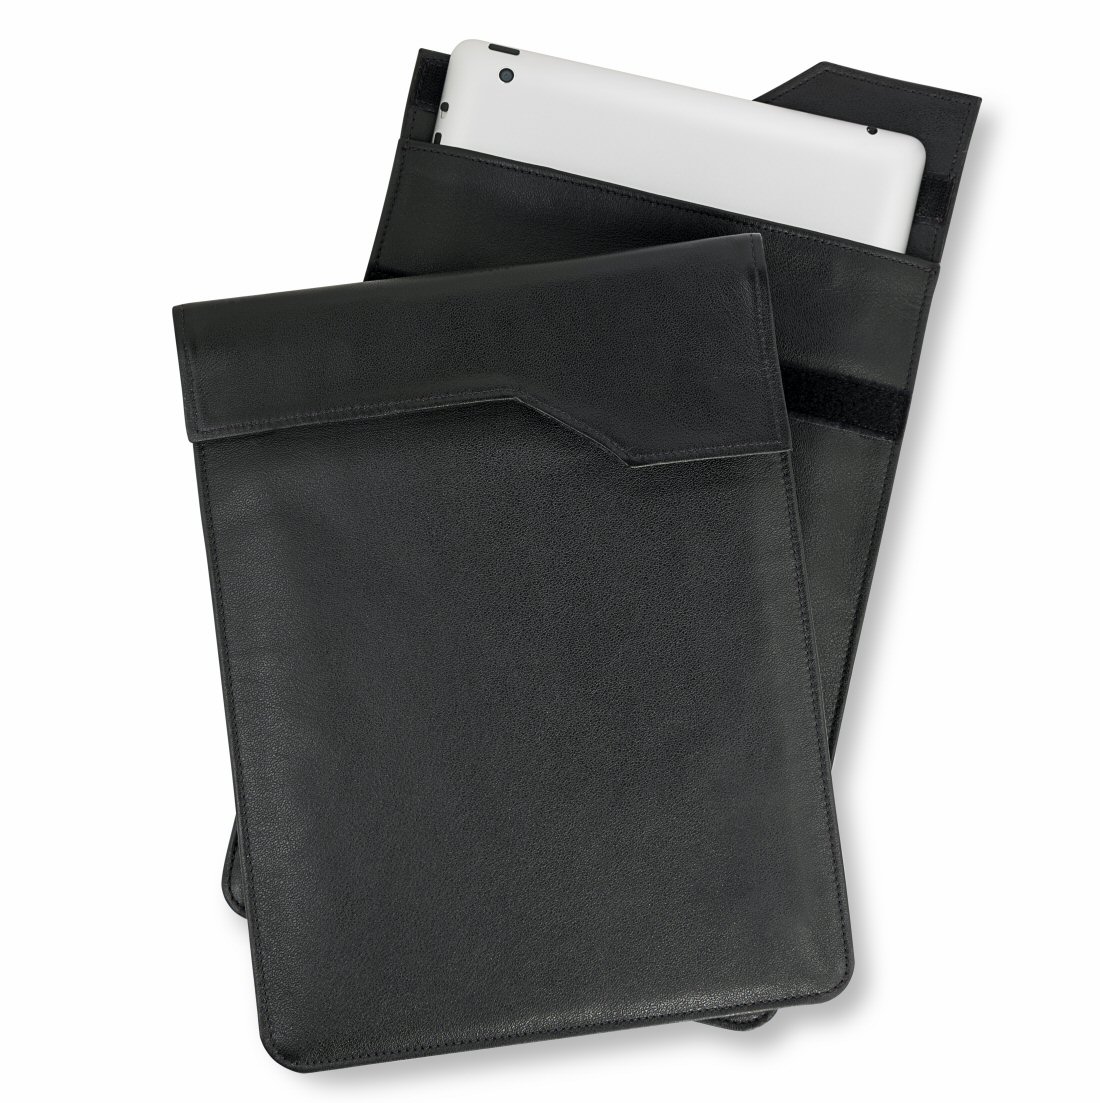 Disklabs Genuine Leather Tablet Shield Executive Faraday Bag (TS1E)